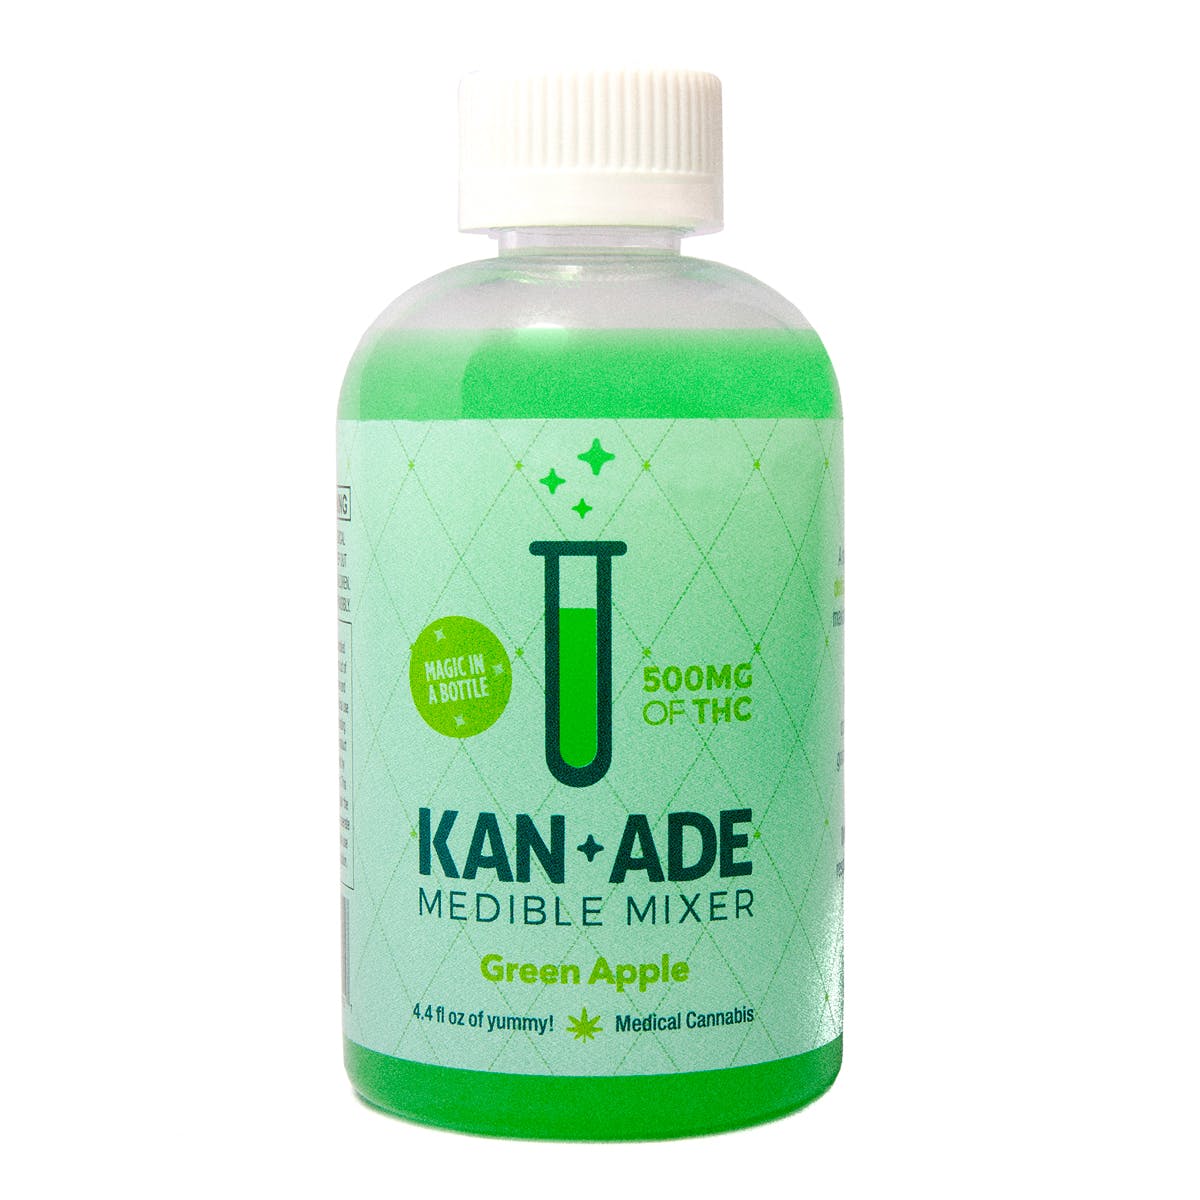 Kan-Ade Green Apple 500mg